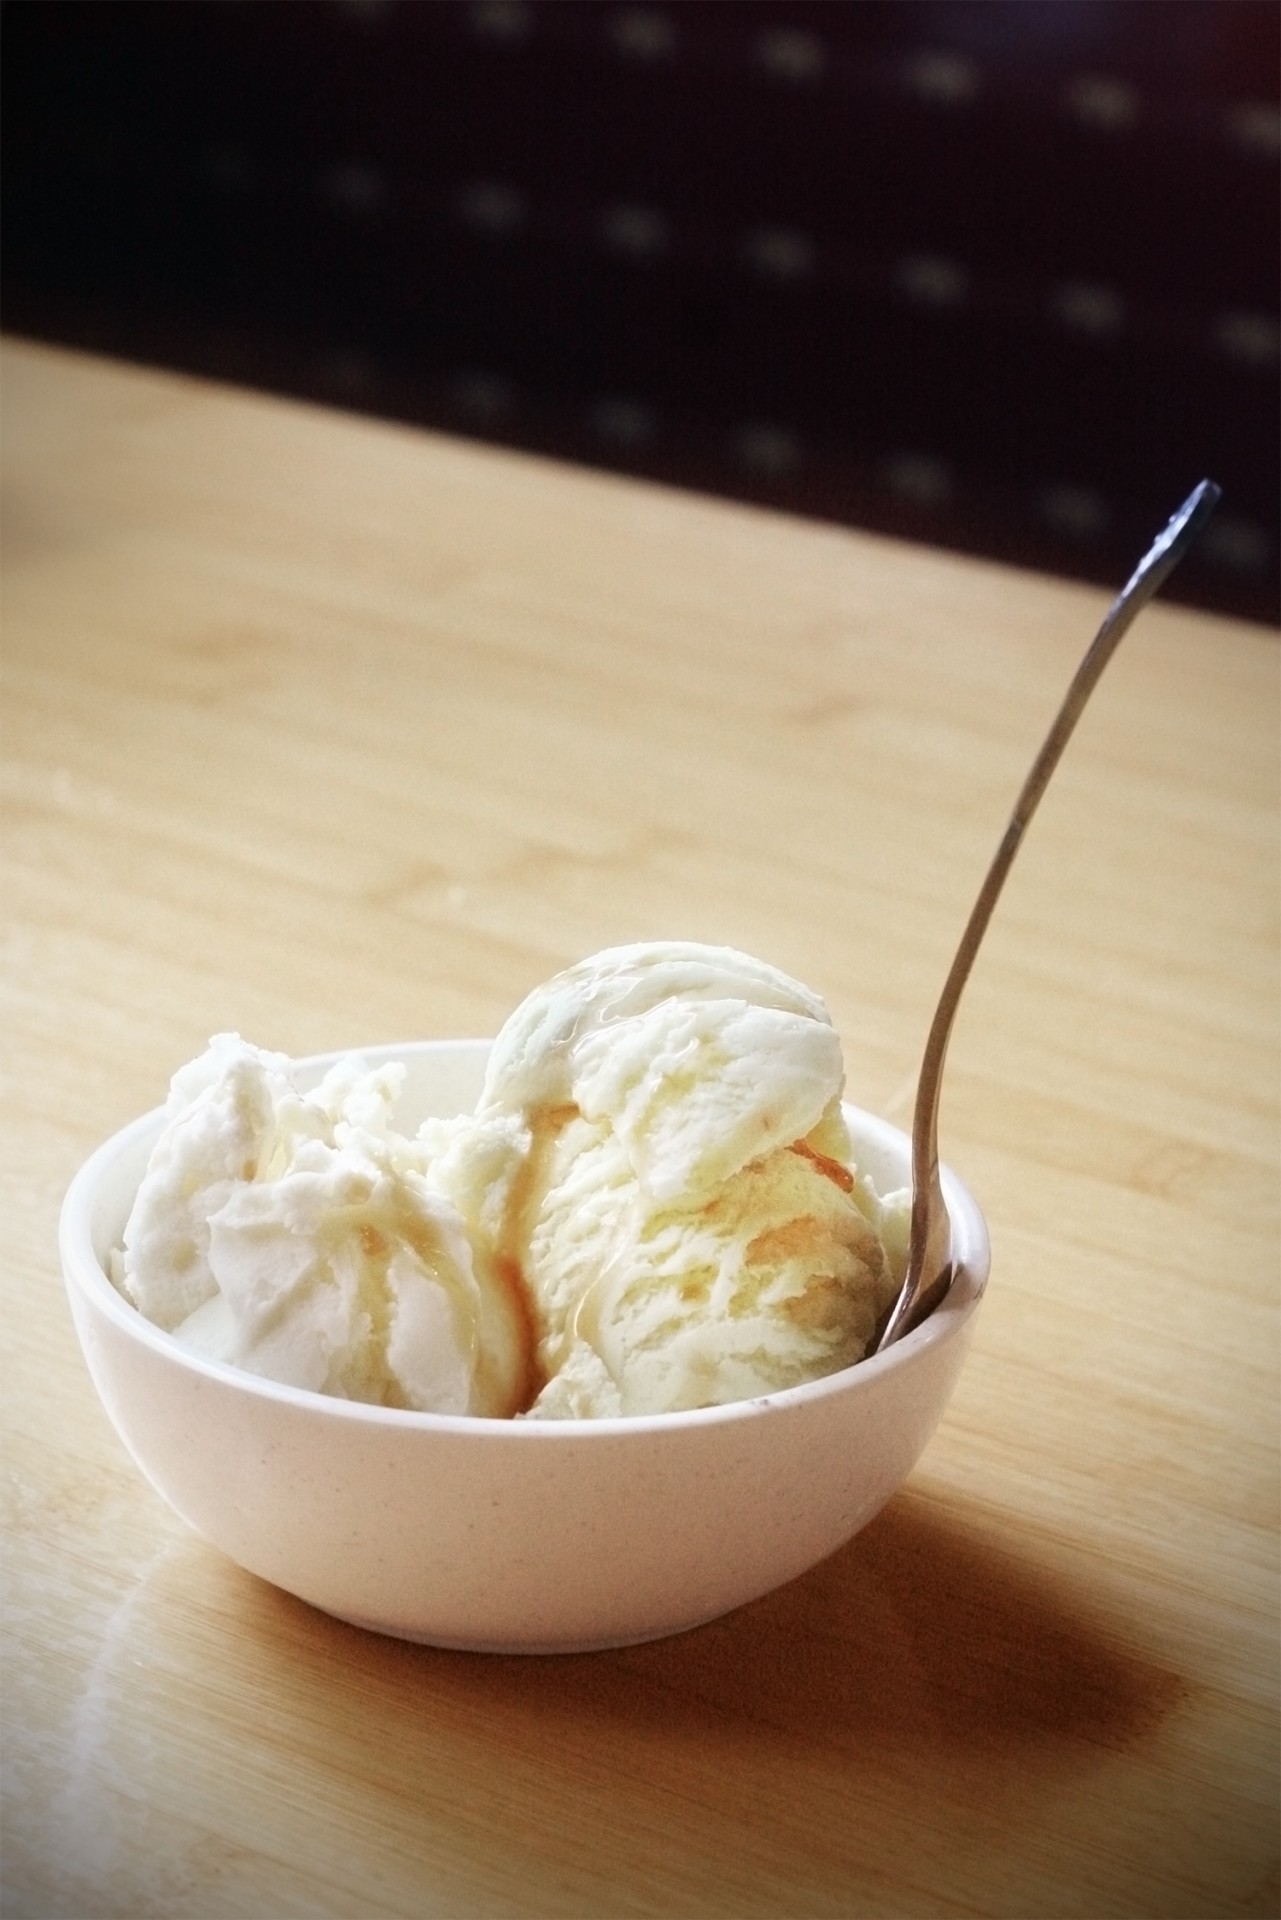 icecream in a bowl